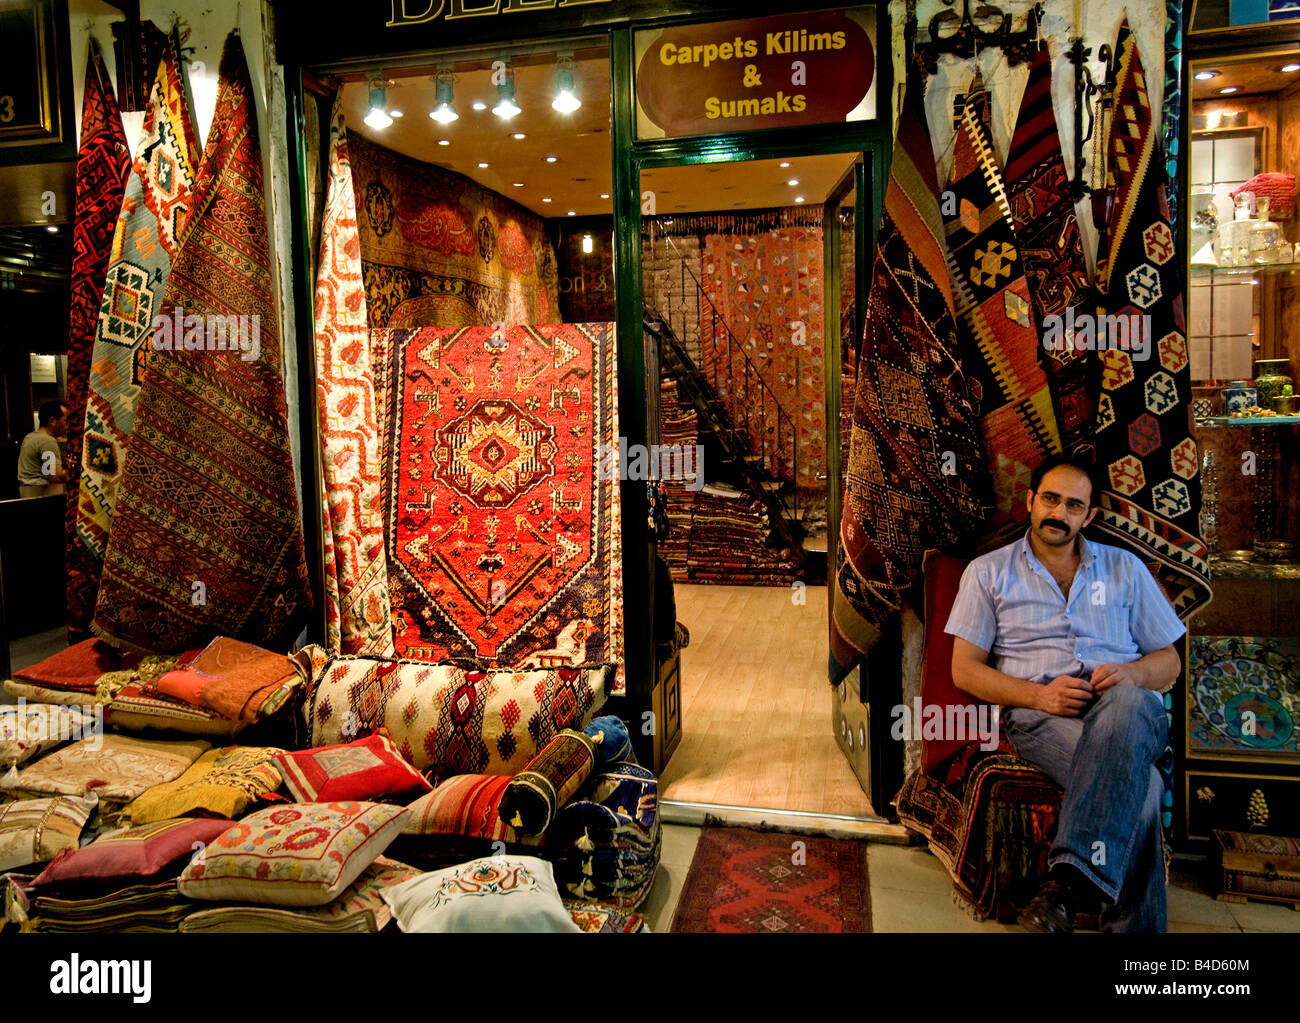 Grand Bazar Kapali Carsi Istanbul Turquie Kapalıcarsı Tapis Tapis Tapis commerce artisanat Banque D'Images